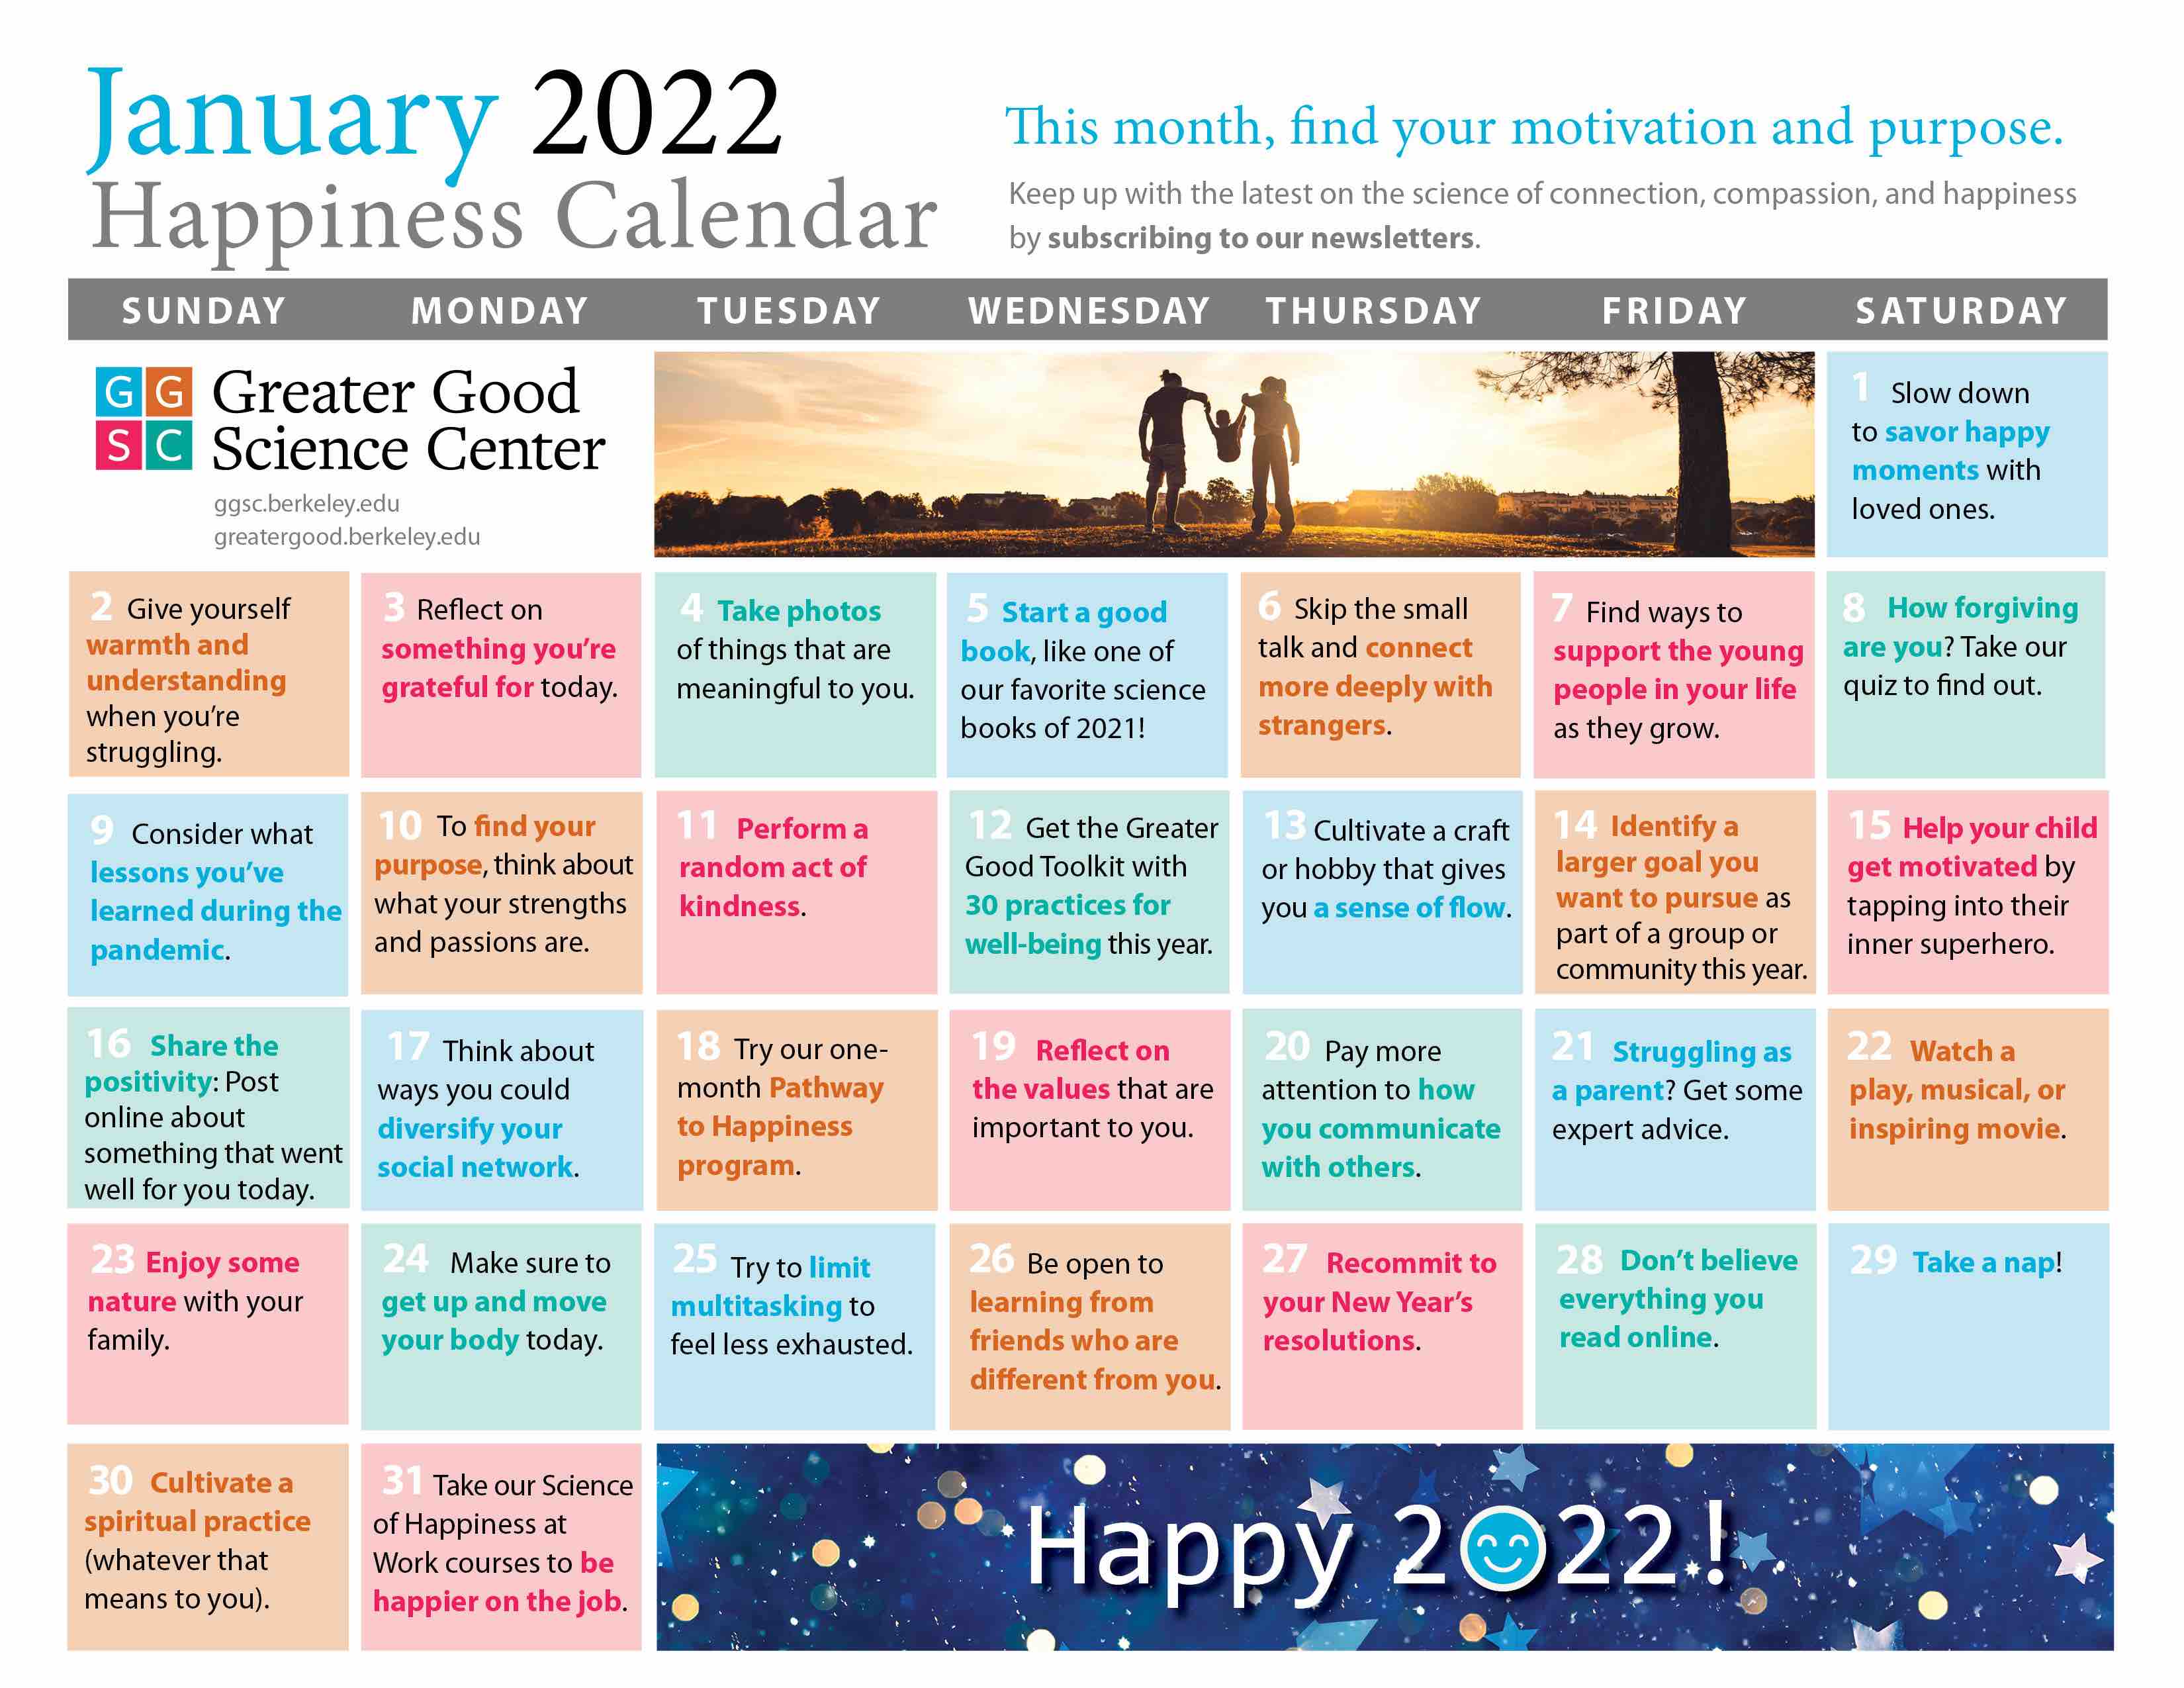 January 2022 happiness calendar